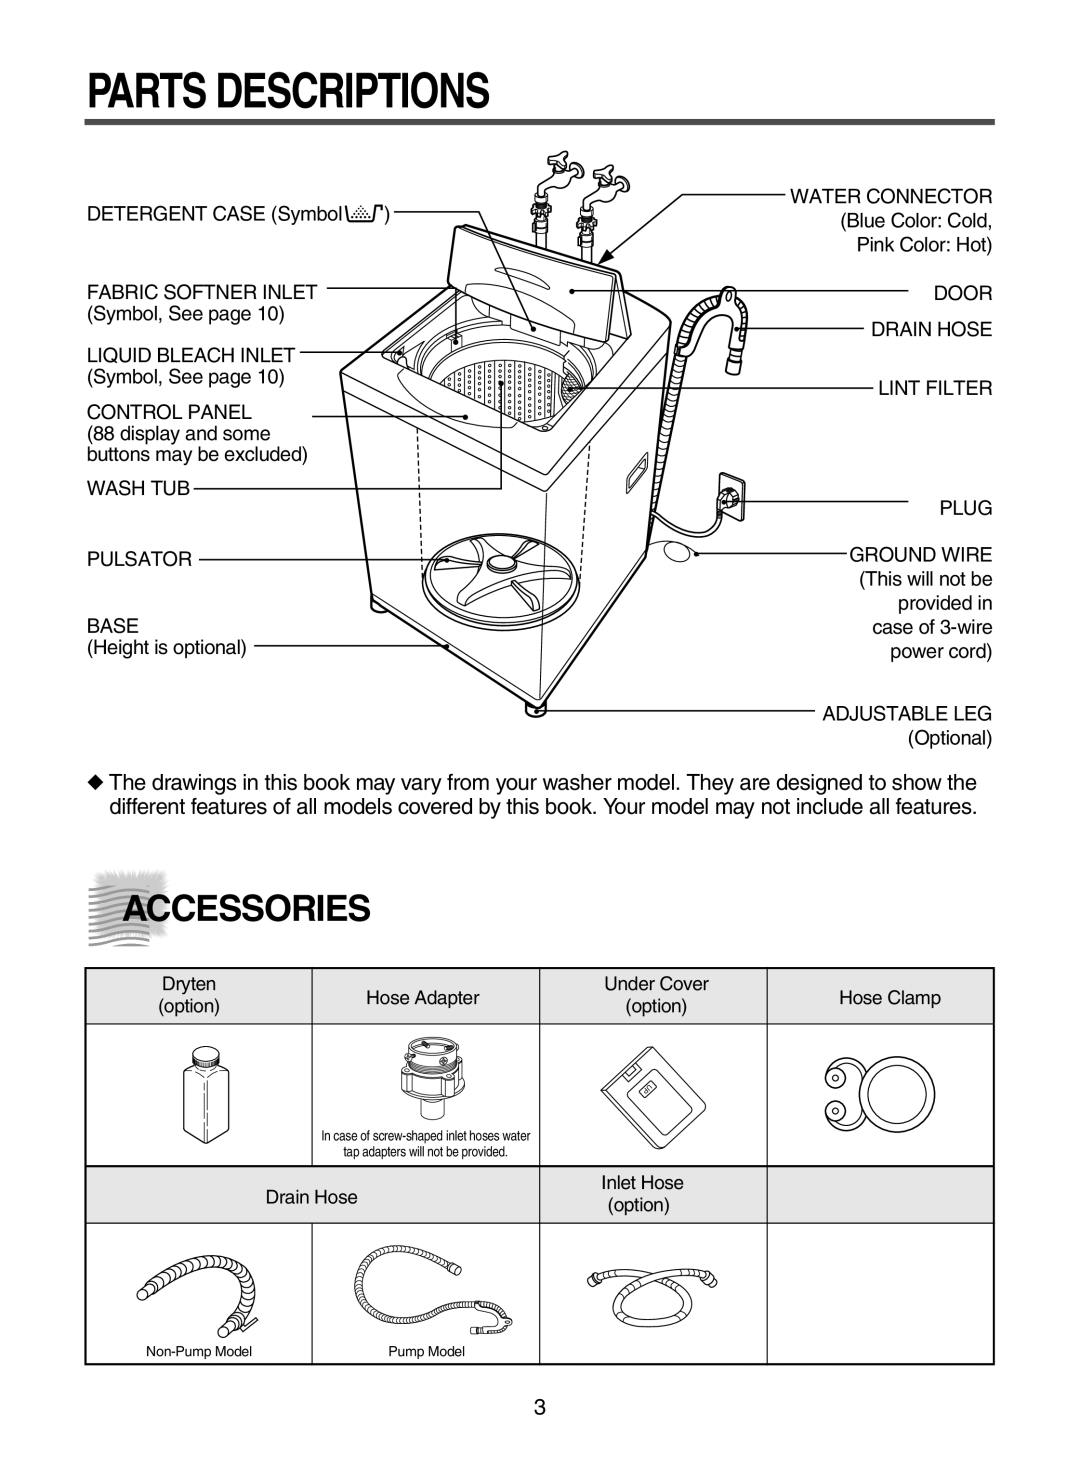 Daewoo DWF-6010 instruction manual Parts Descriptions, Accessories 